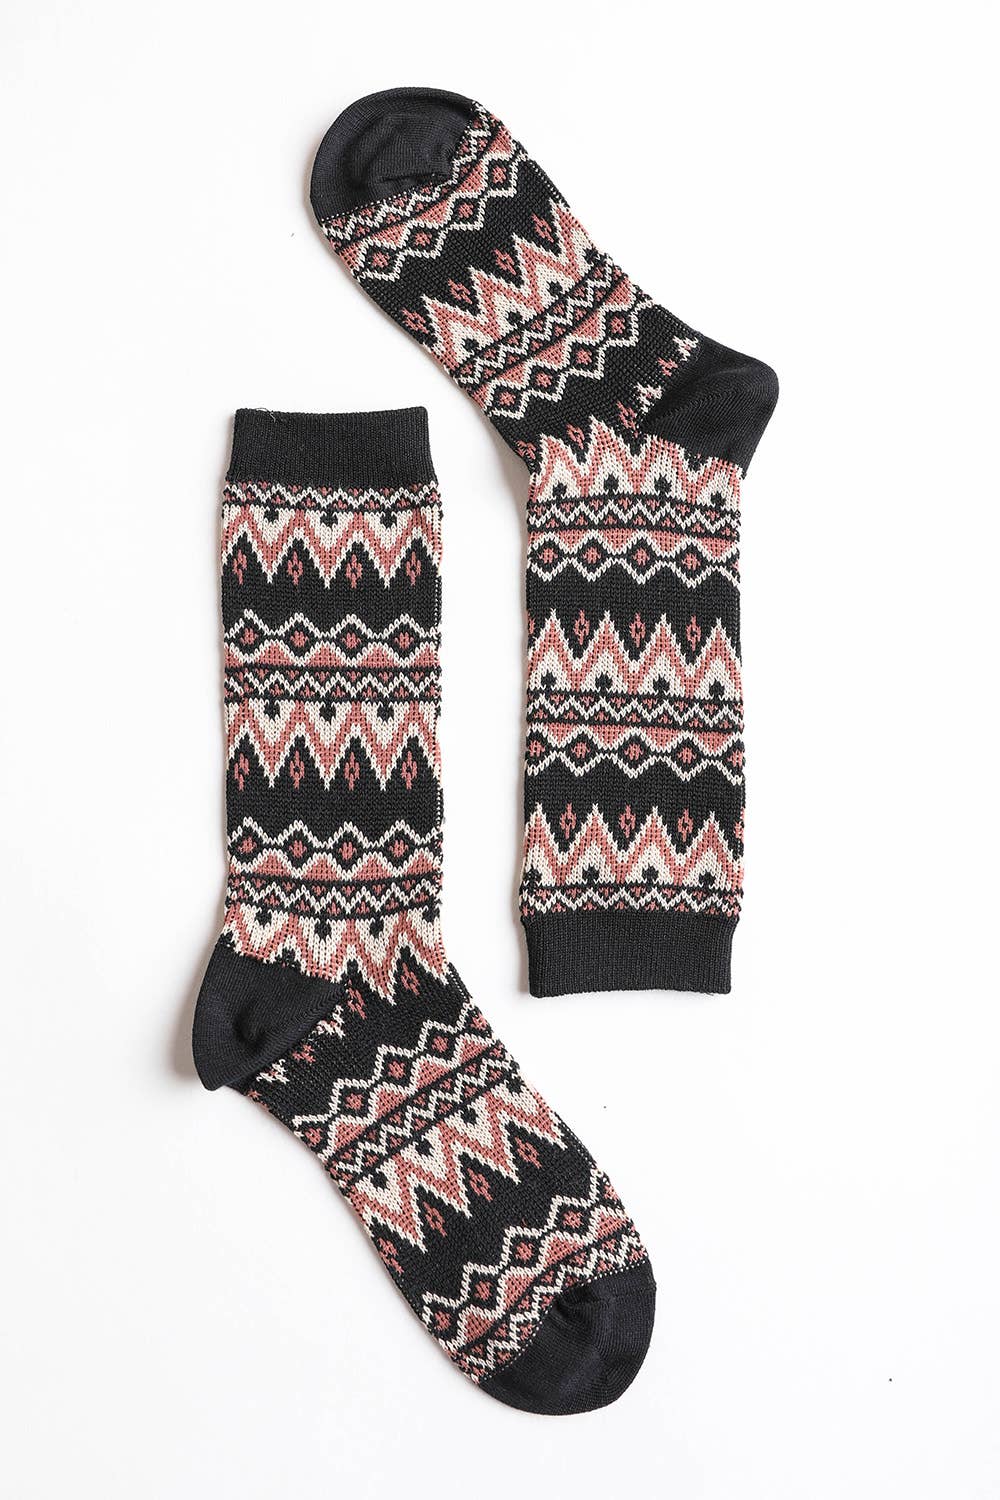 Tribal Pattern Black Socks - Off The Trail Gifts